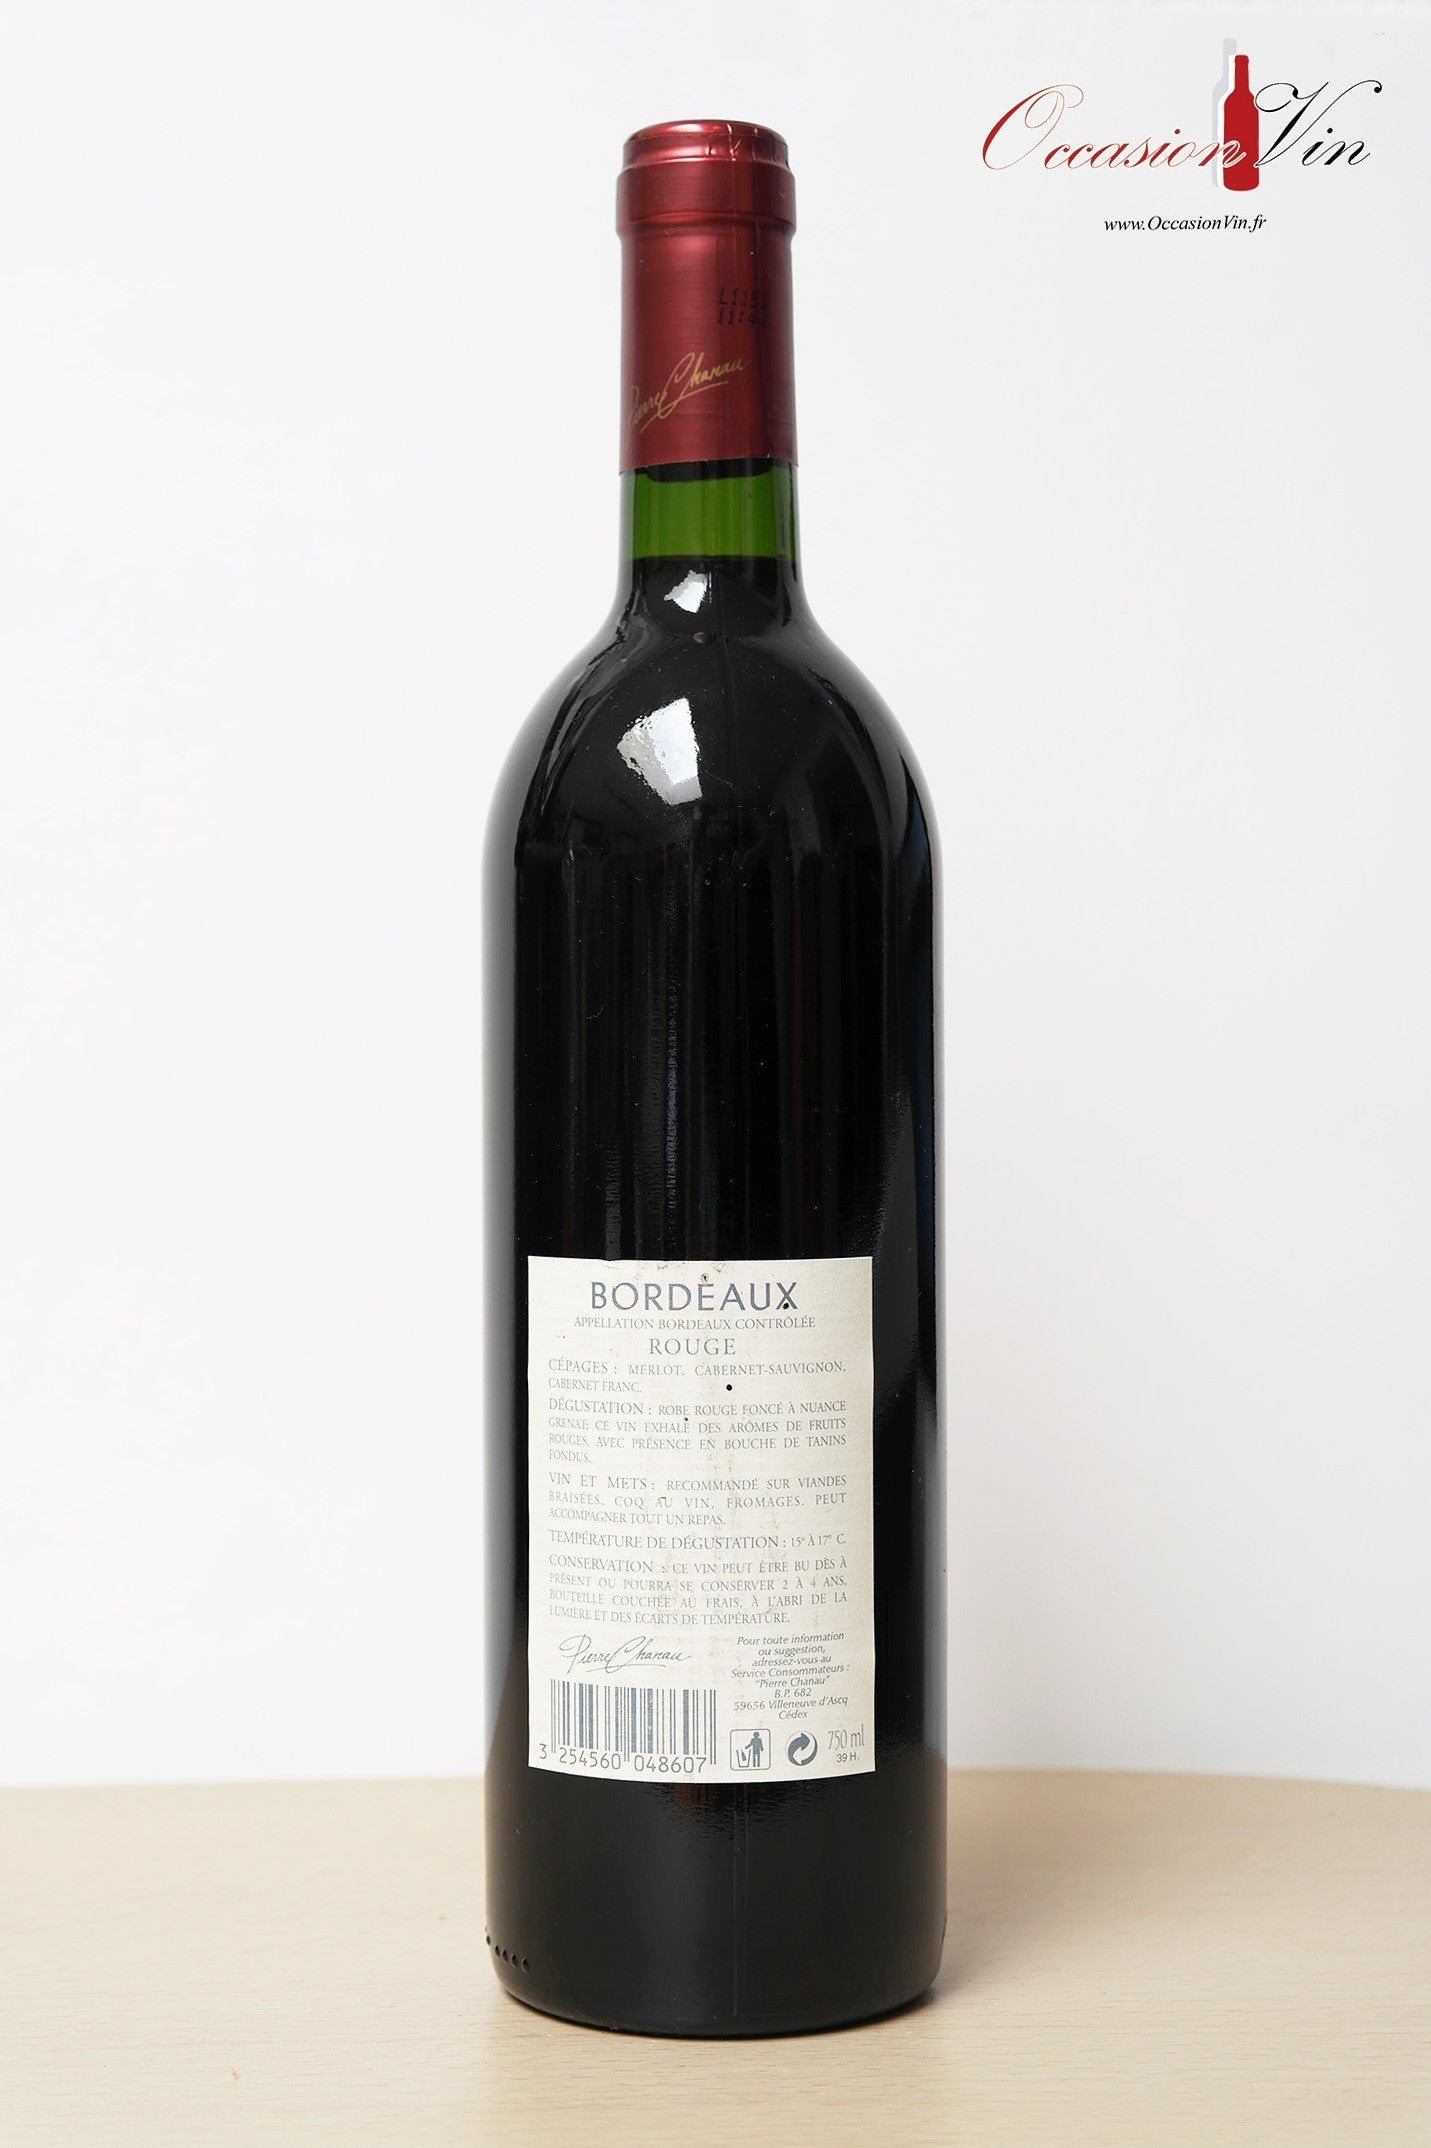 Bordeaux Pierre Chanau Vin 2000